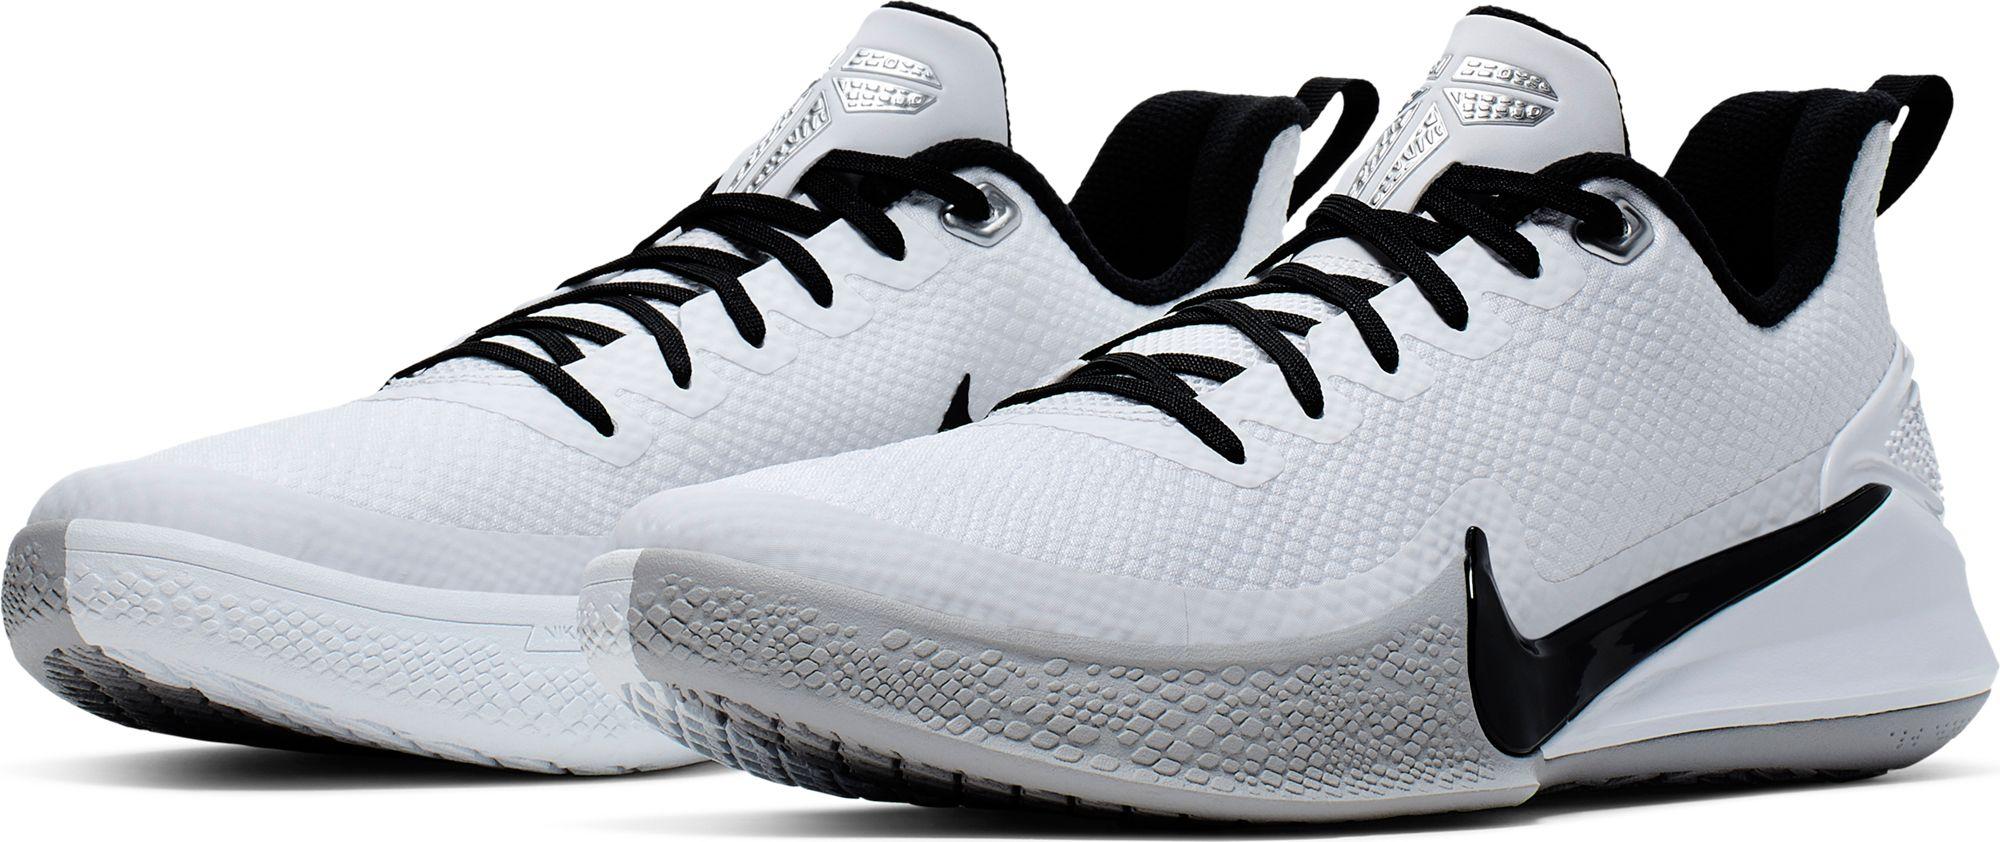 Nike Kobe Mamba Focus Basketball Shoes 